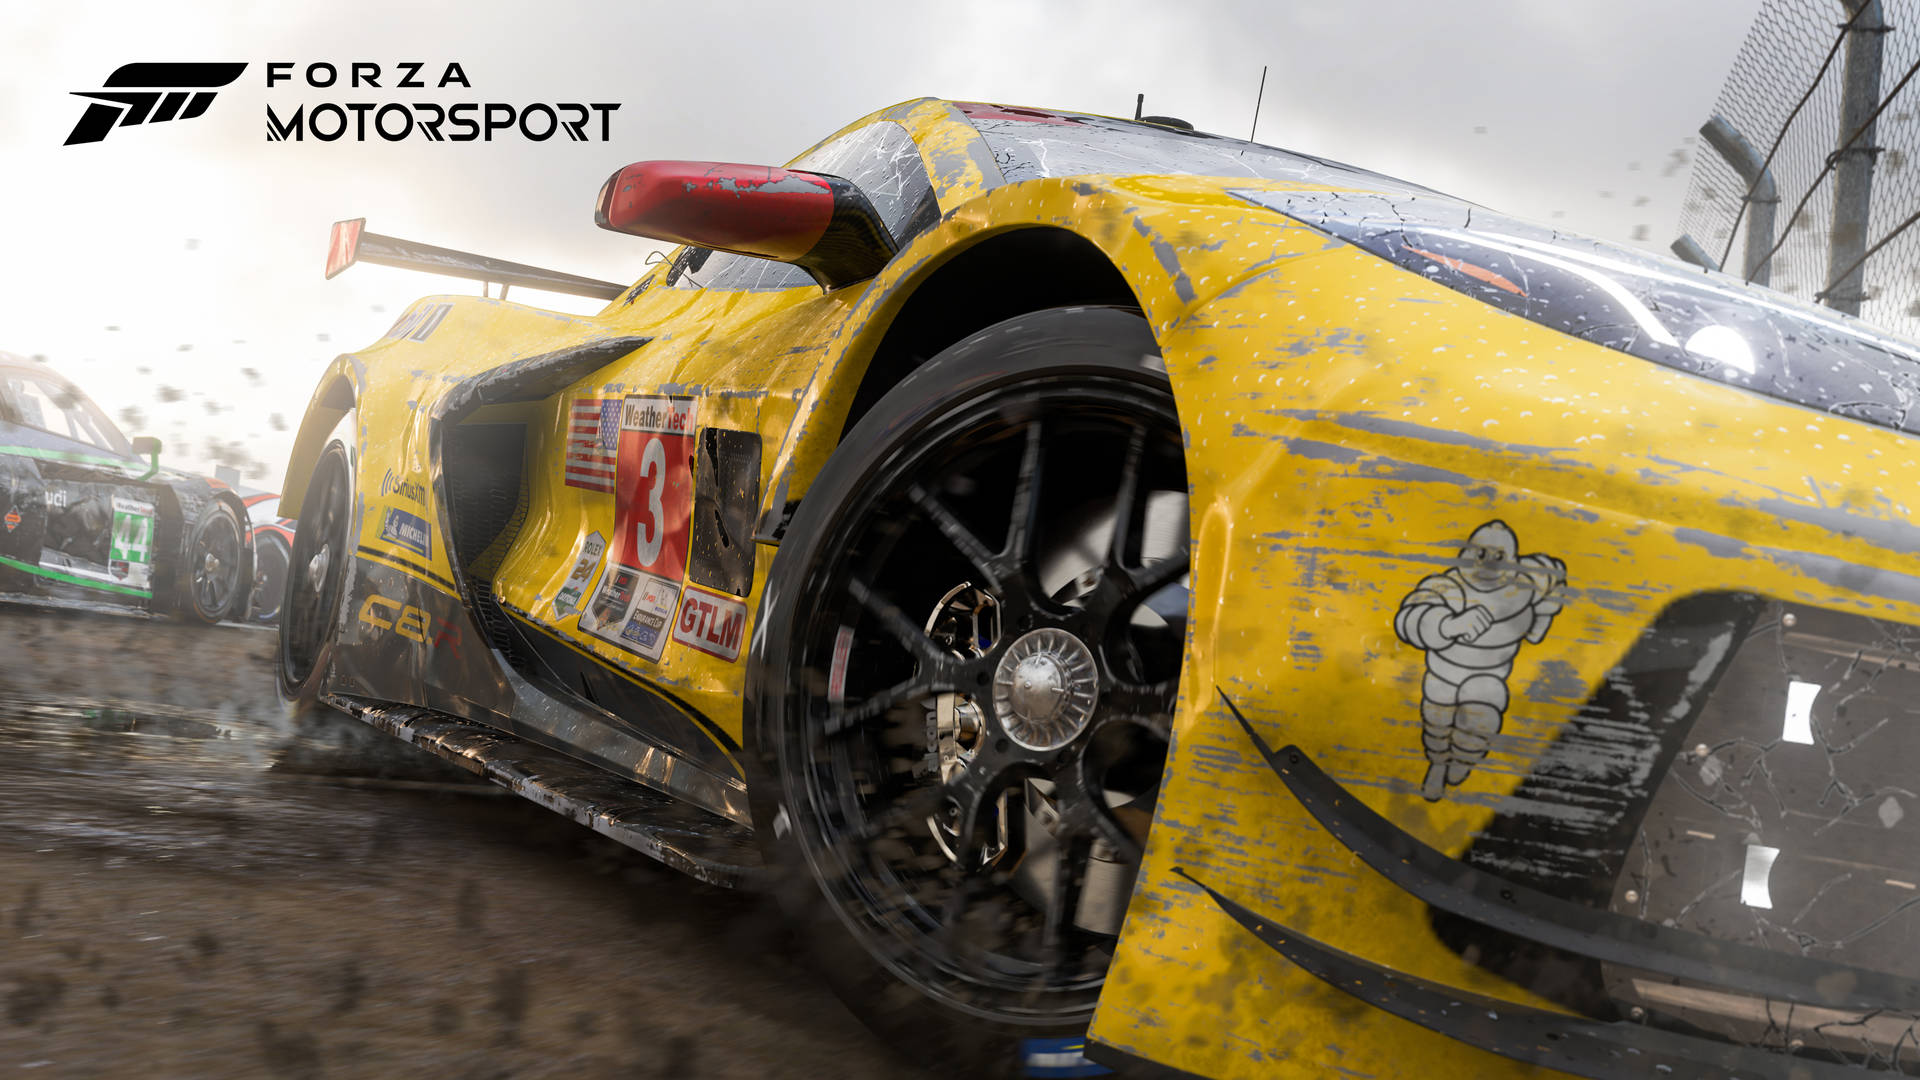 Forza Motorsport Video Game Poster Wallpaper